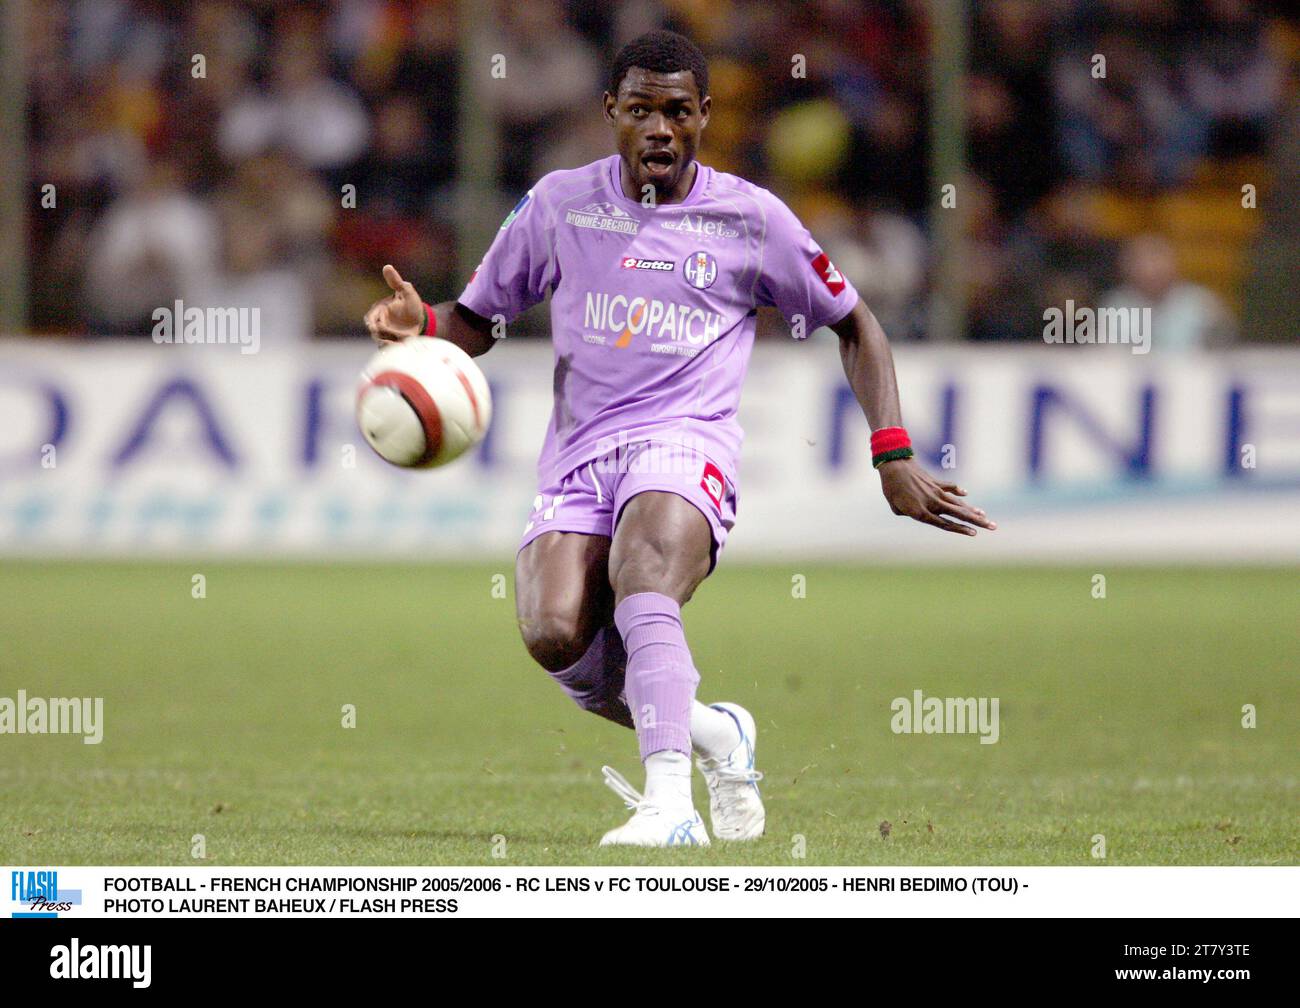 FOOTBALL - FRENCH CHAMPIONSHIP 2005/2006 - RC LENS v FC TOULOUSE - 29/10/2005 - HENRI BEDIMO (TOU) - PHOTO LAURENT BAHEUX / FLASH PRESS Stock Photo